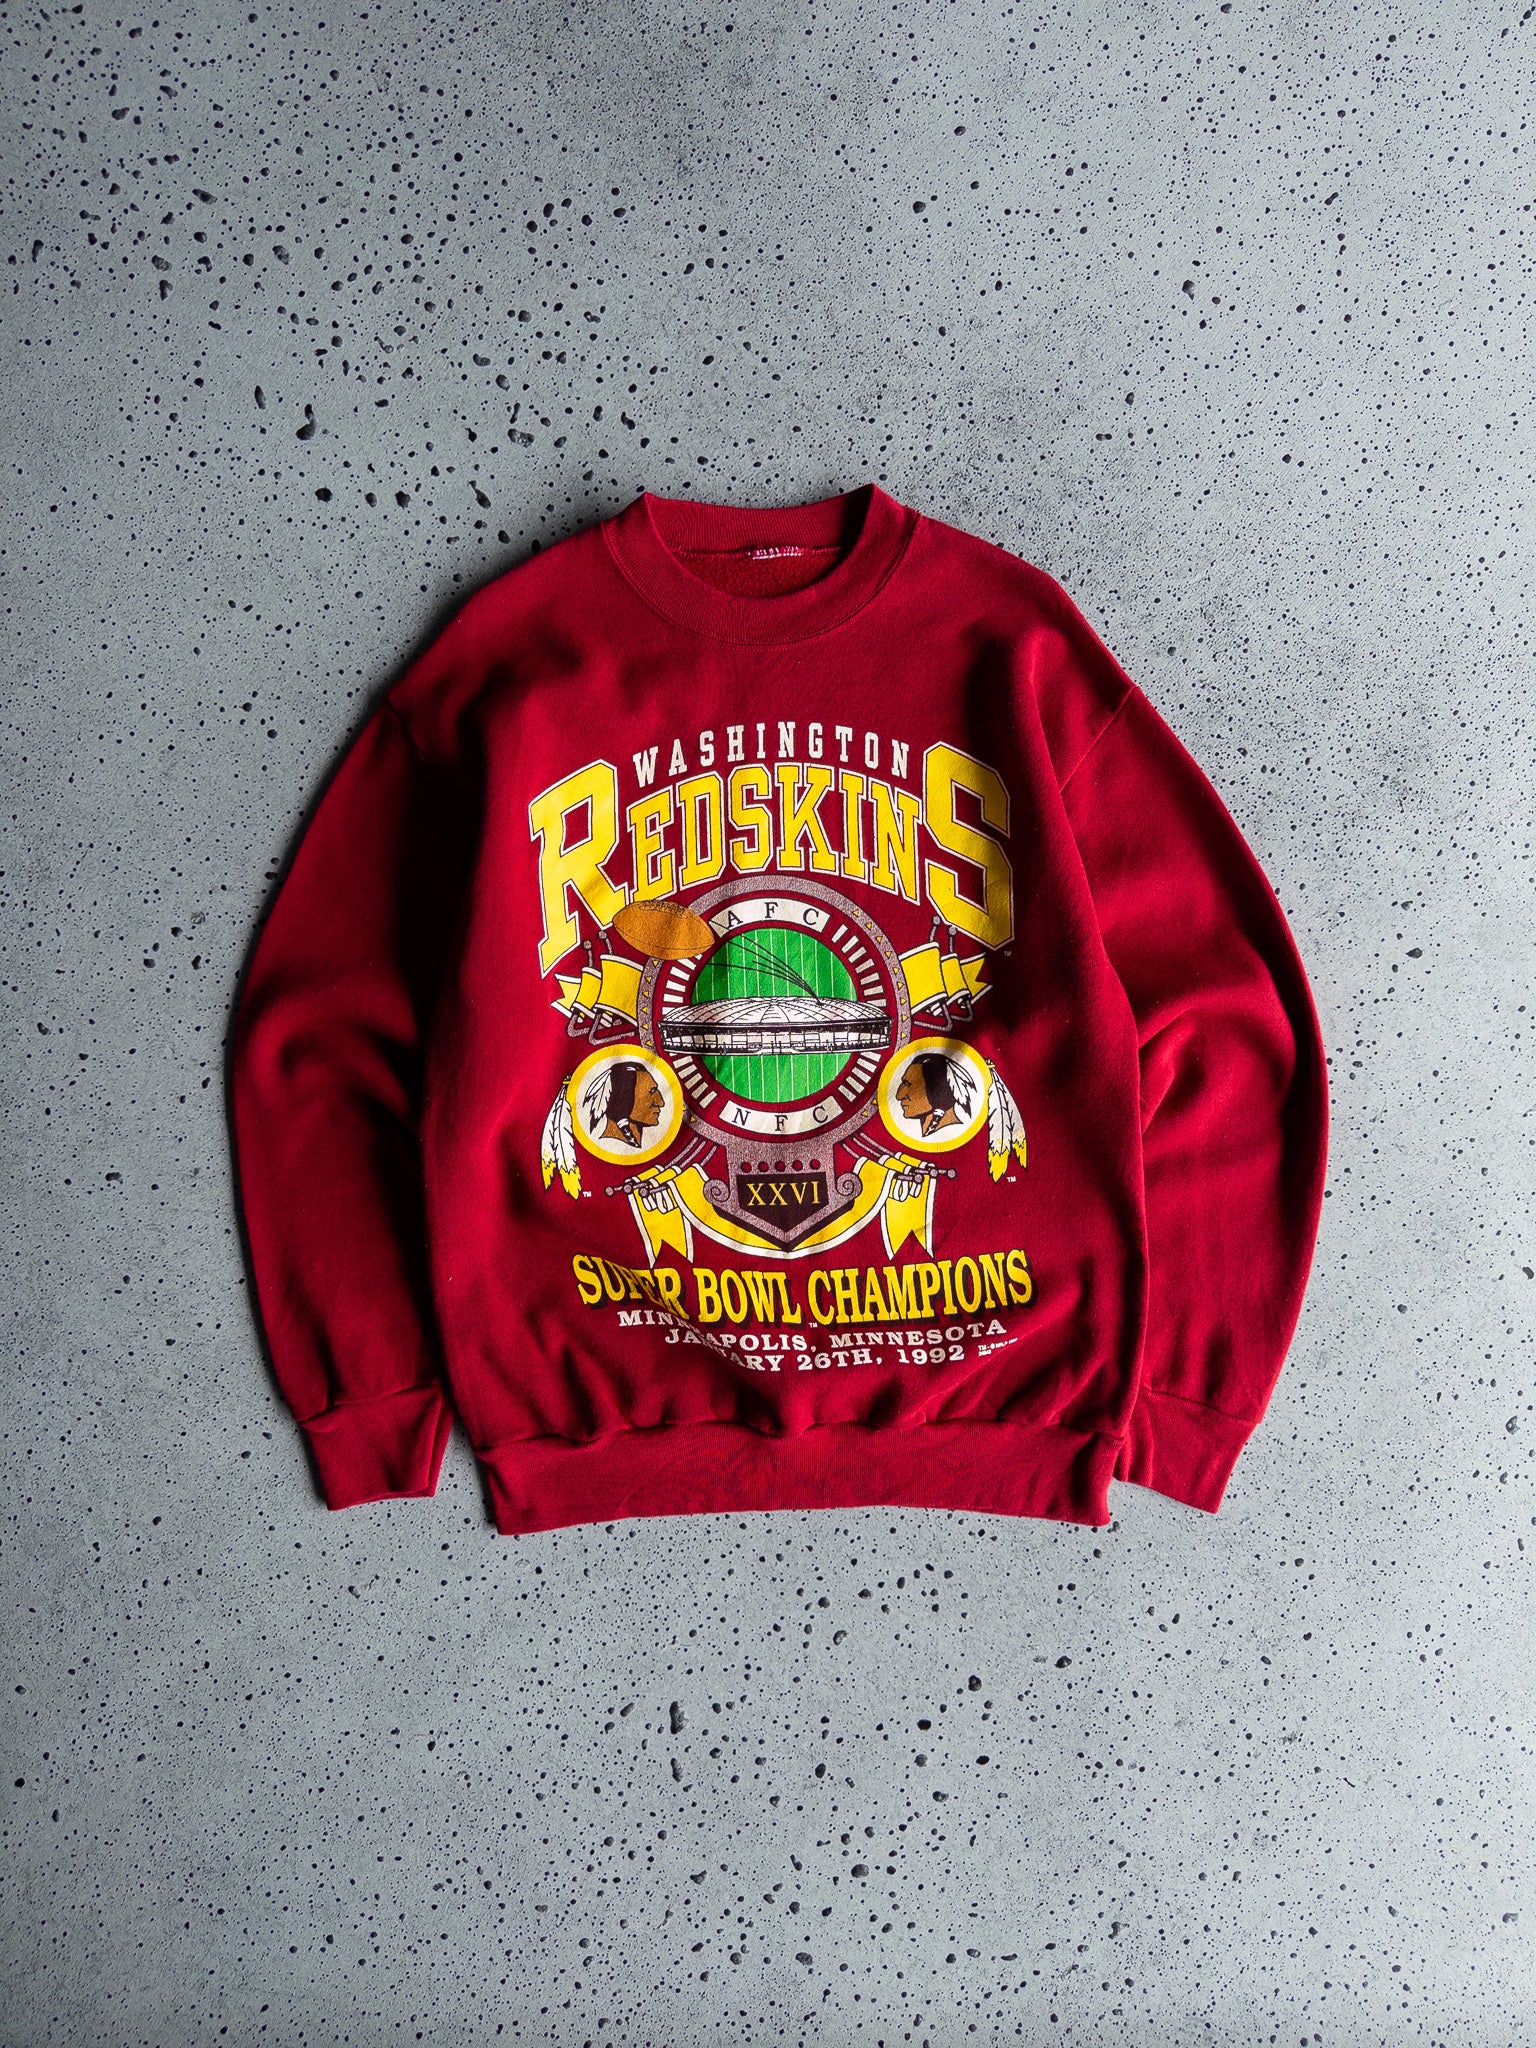 Vintage Washington Redskins Superbowl Champions 1992 Sweatshirt (M)